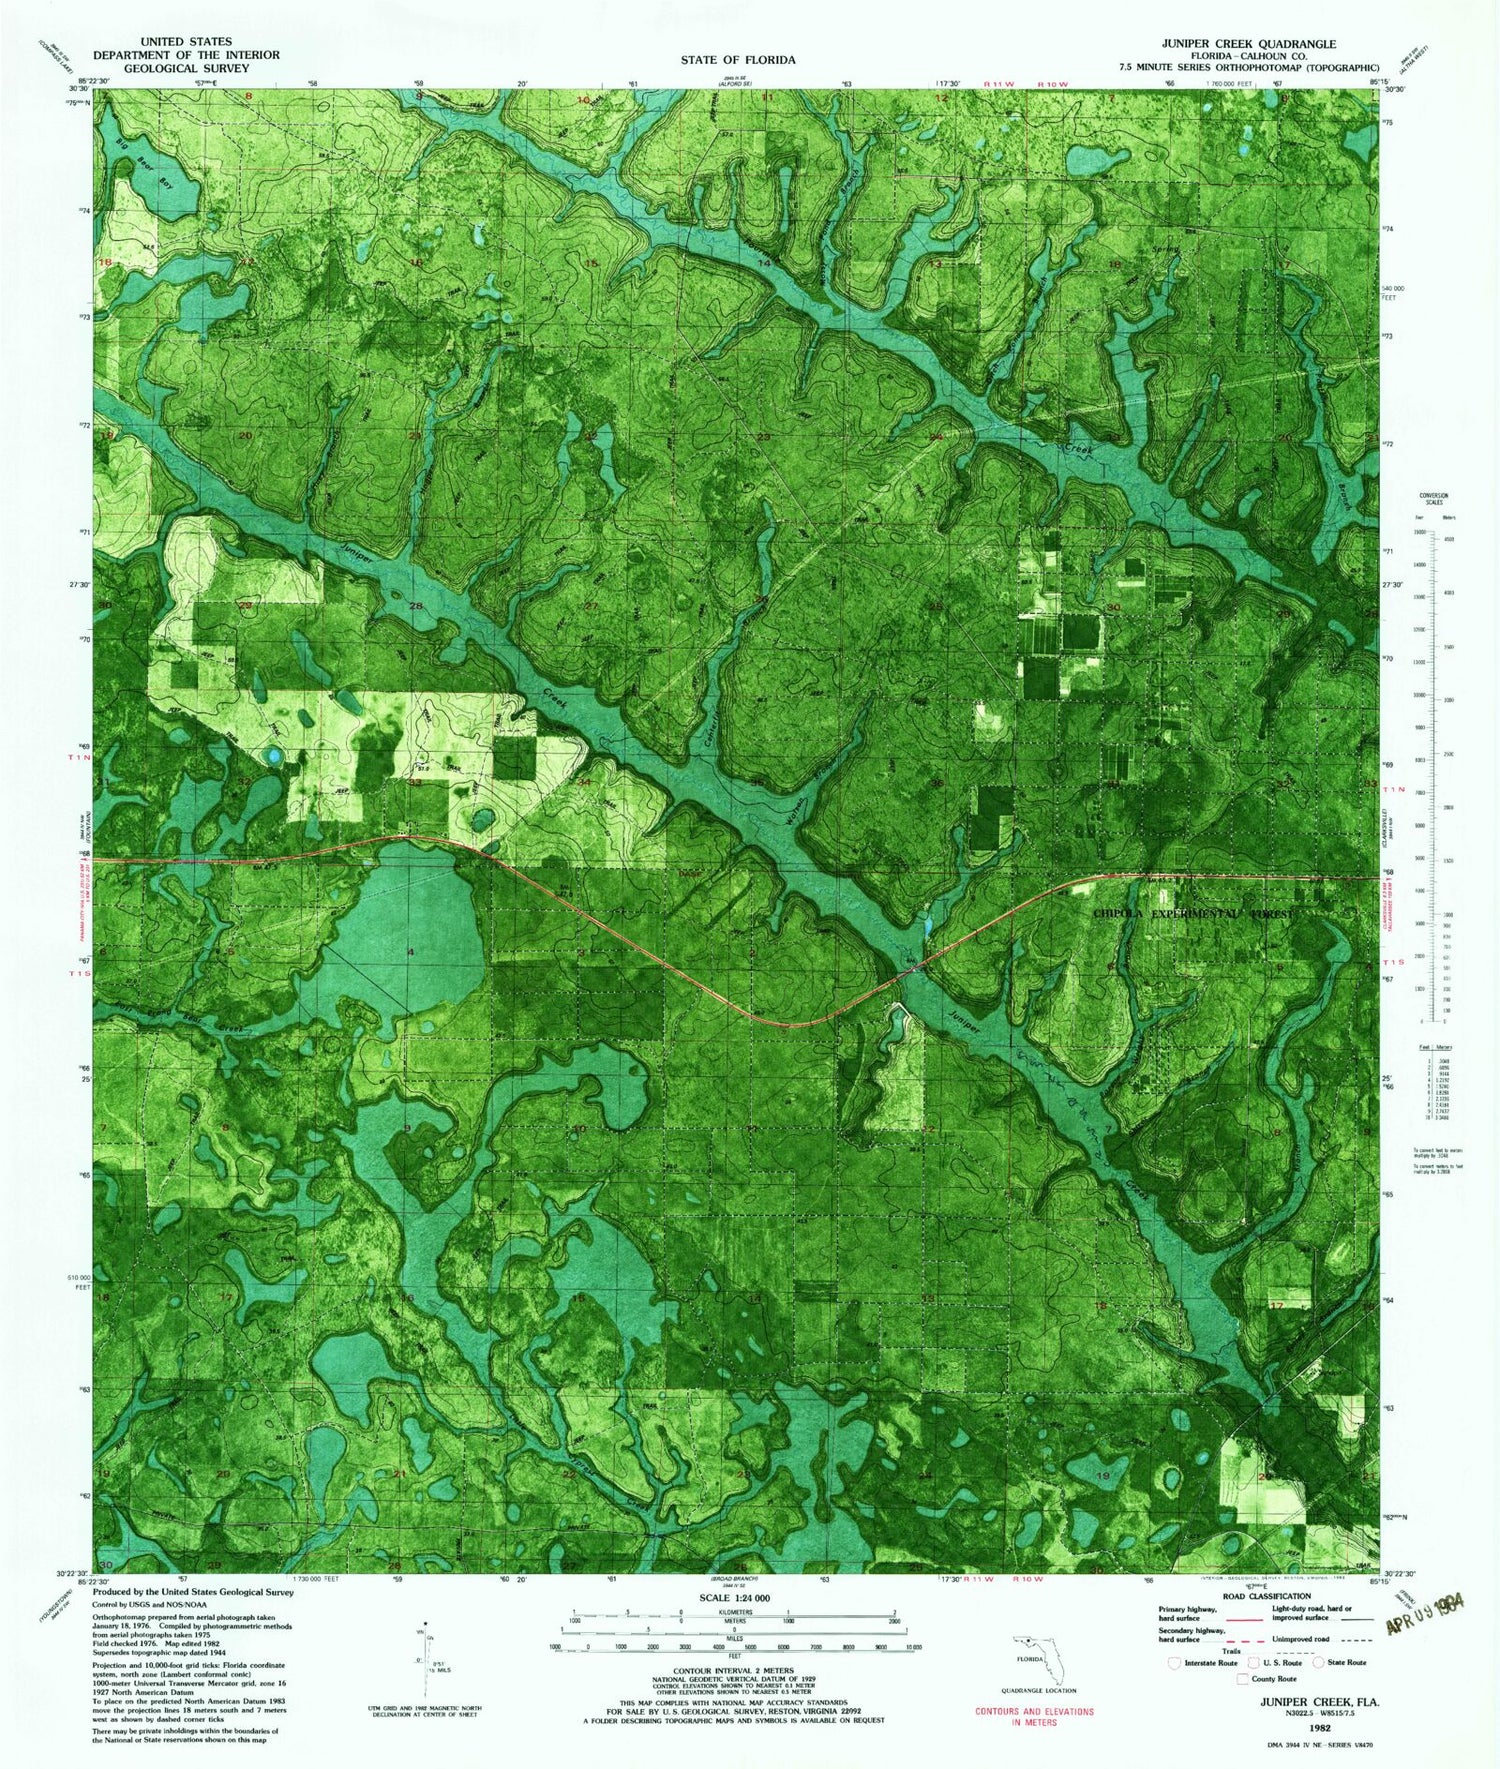 Classic USGS Juniper Creek Florida 7.5'x7.5' Topo Map Image